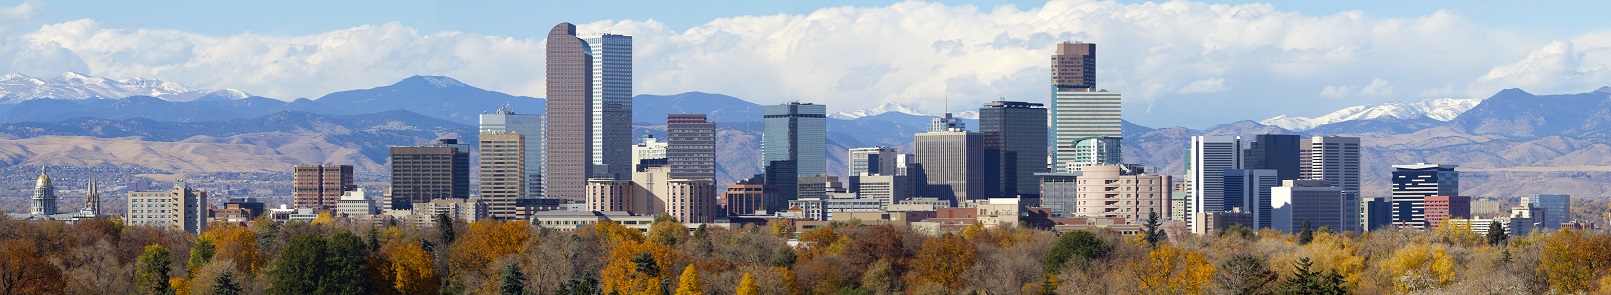 Denver downtown business skyline